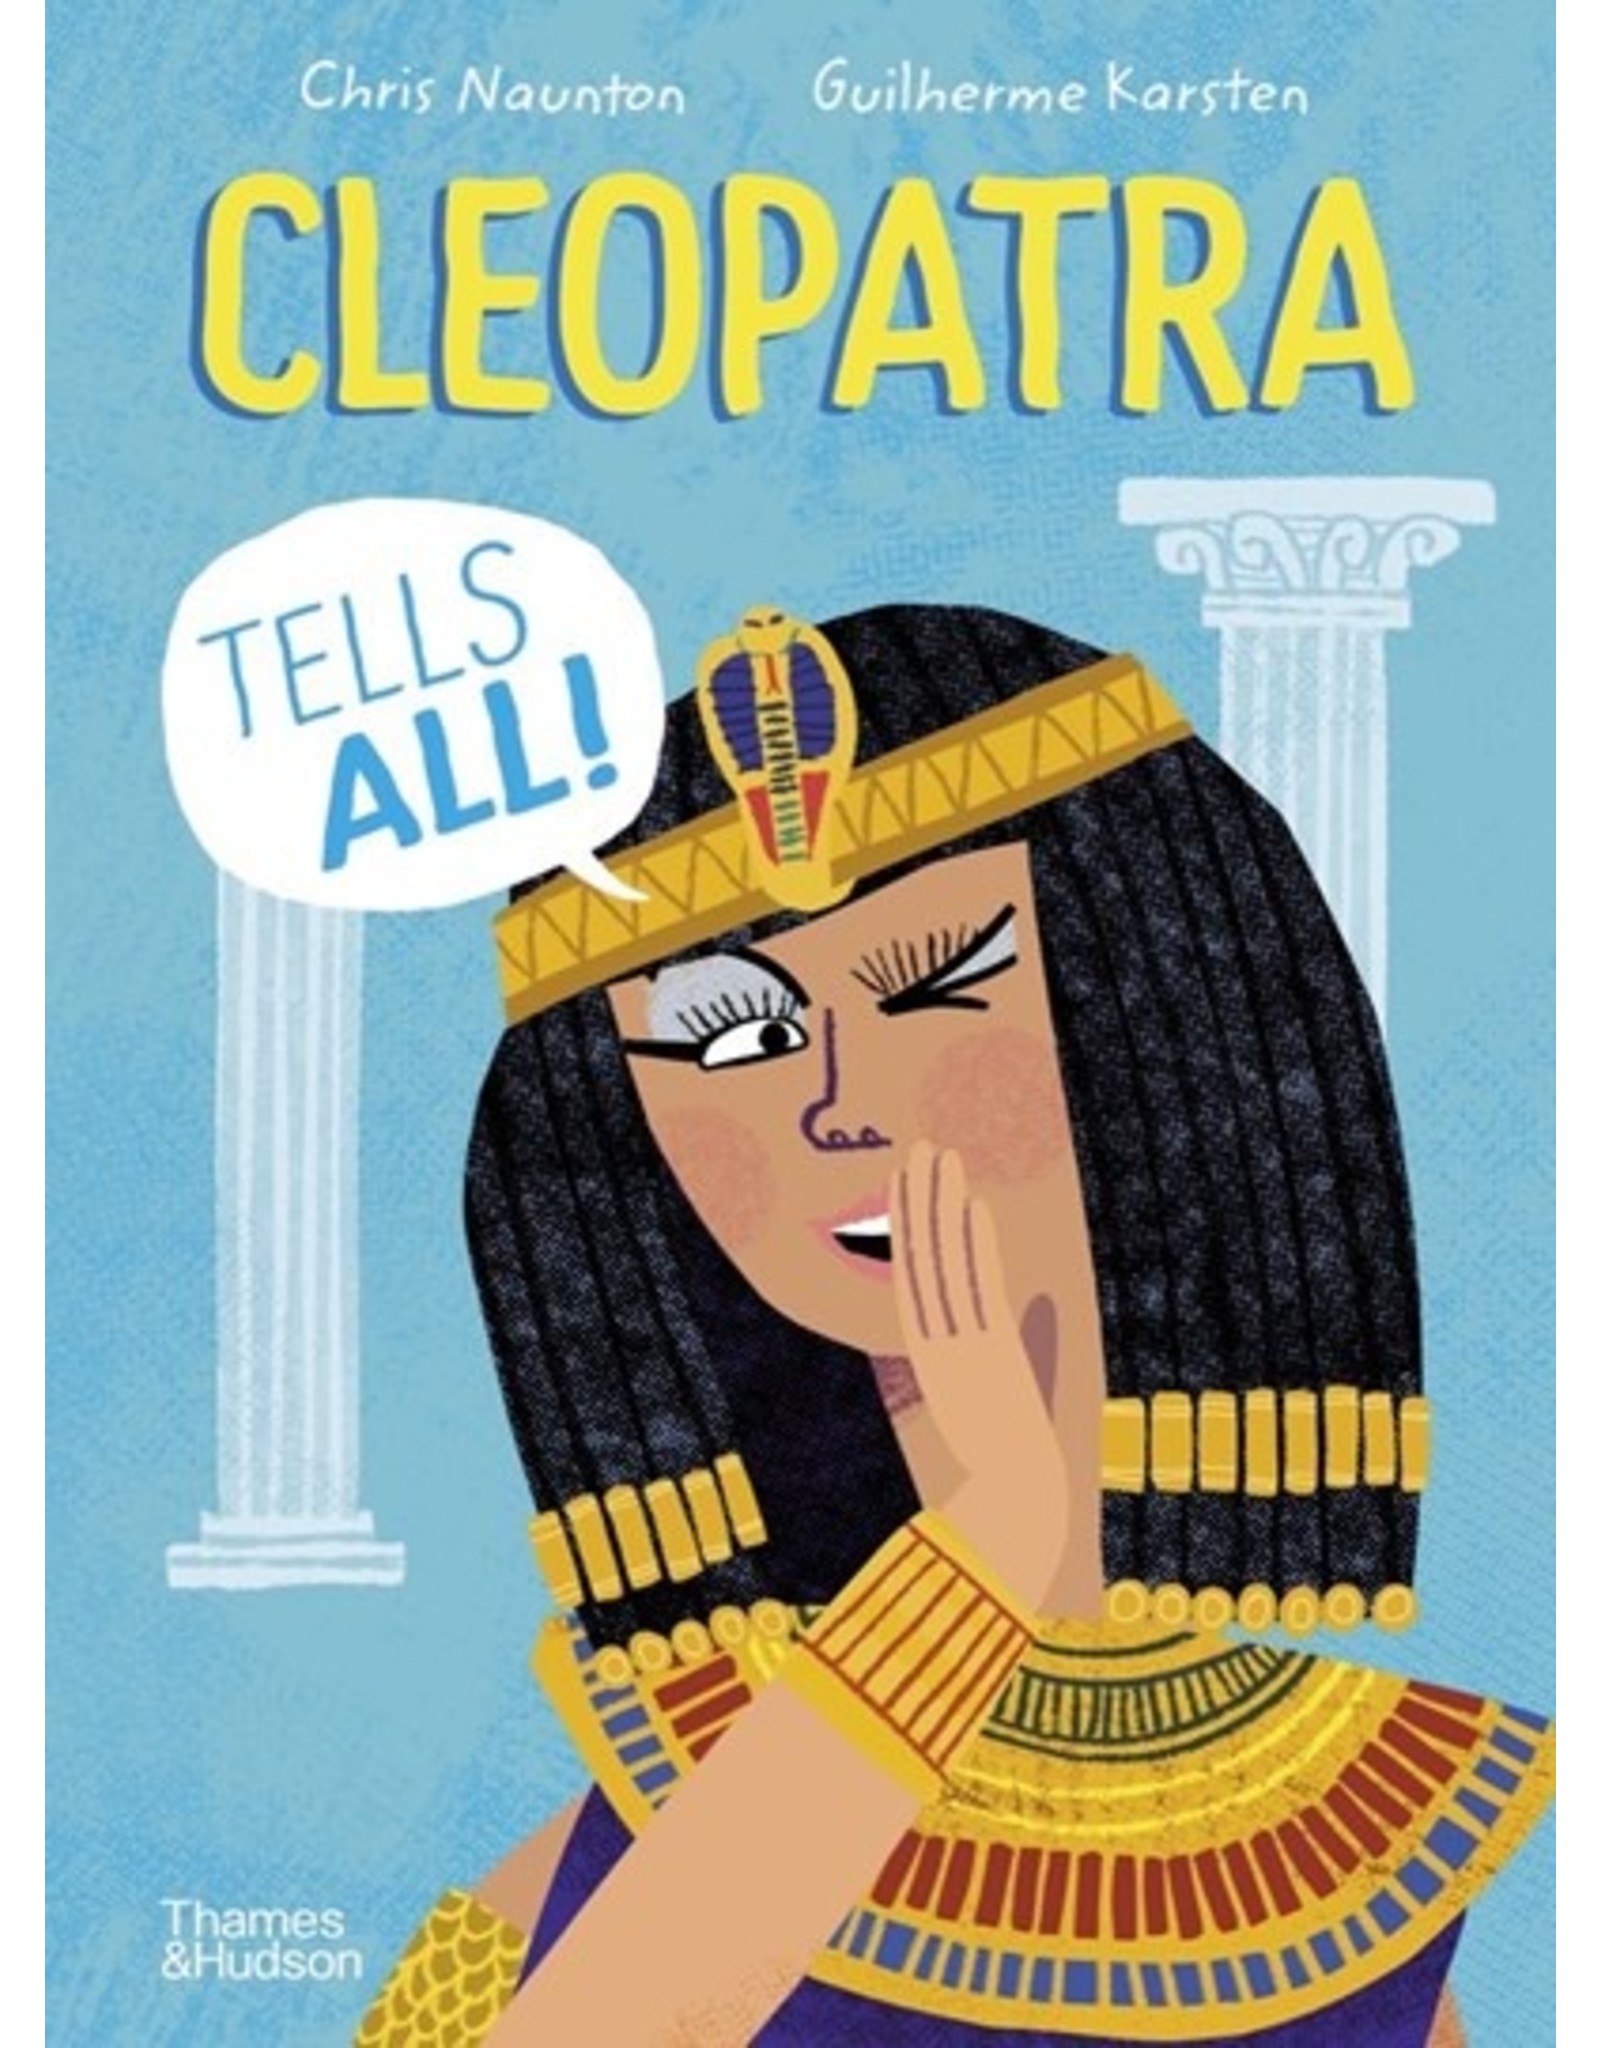 Books Cleopatra Tells All! by Chris Naunton  and Guilherme Karsten